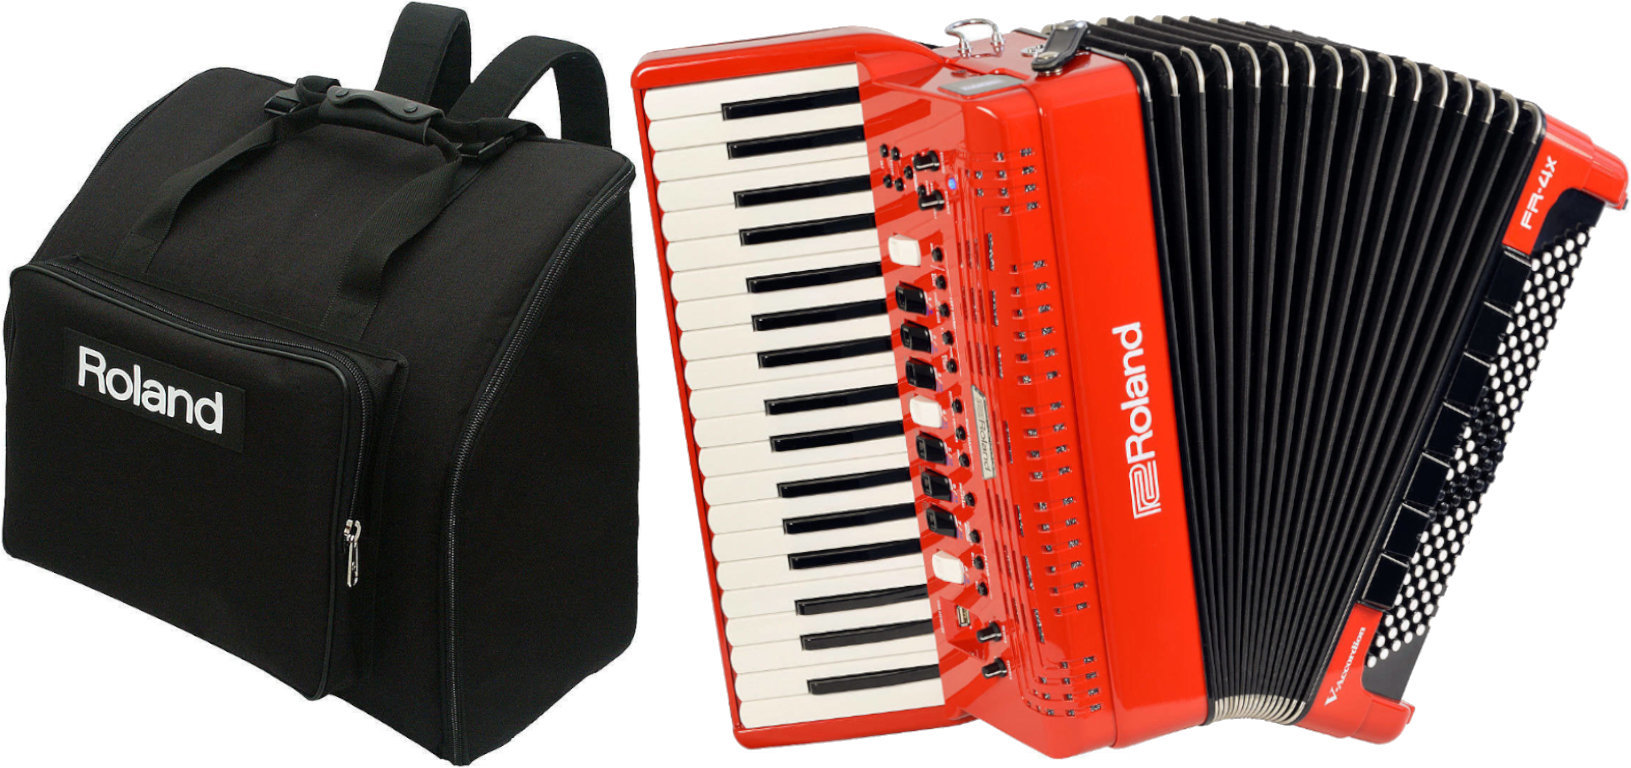 Accordeon met toetsenbord Roland FR-4x Red Bag SET Red Accordeon met toetsenbord